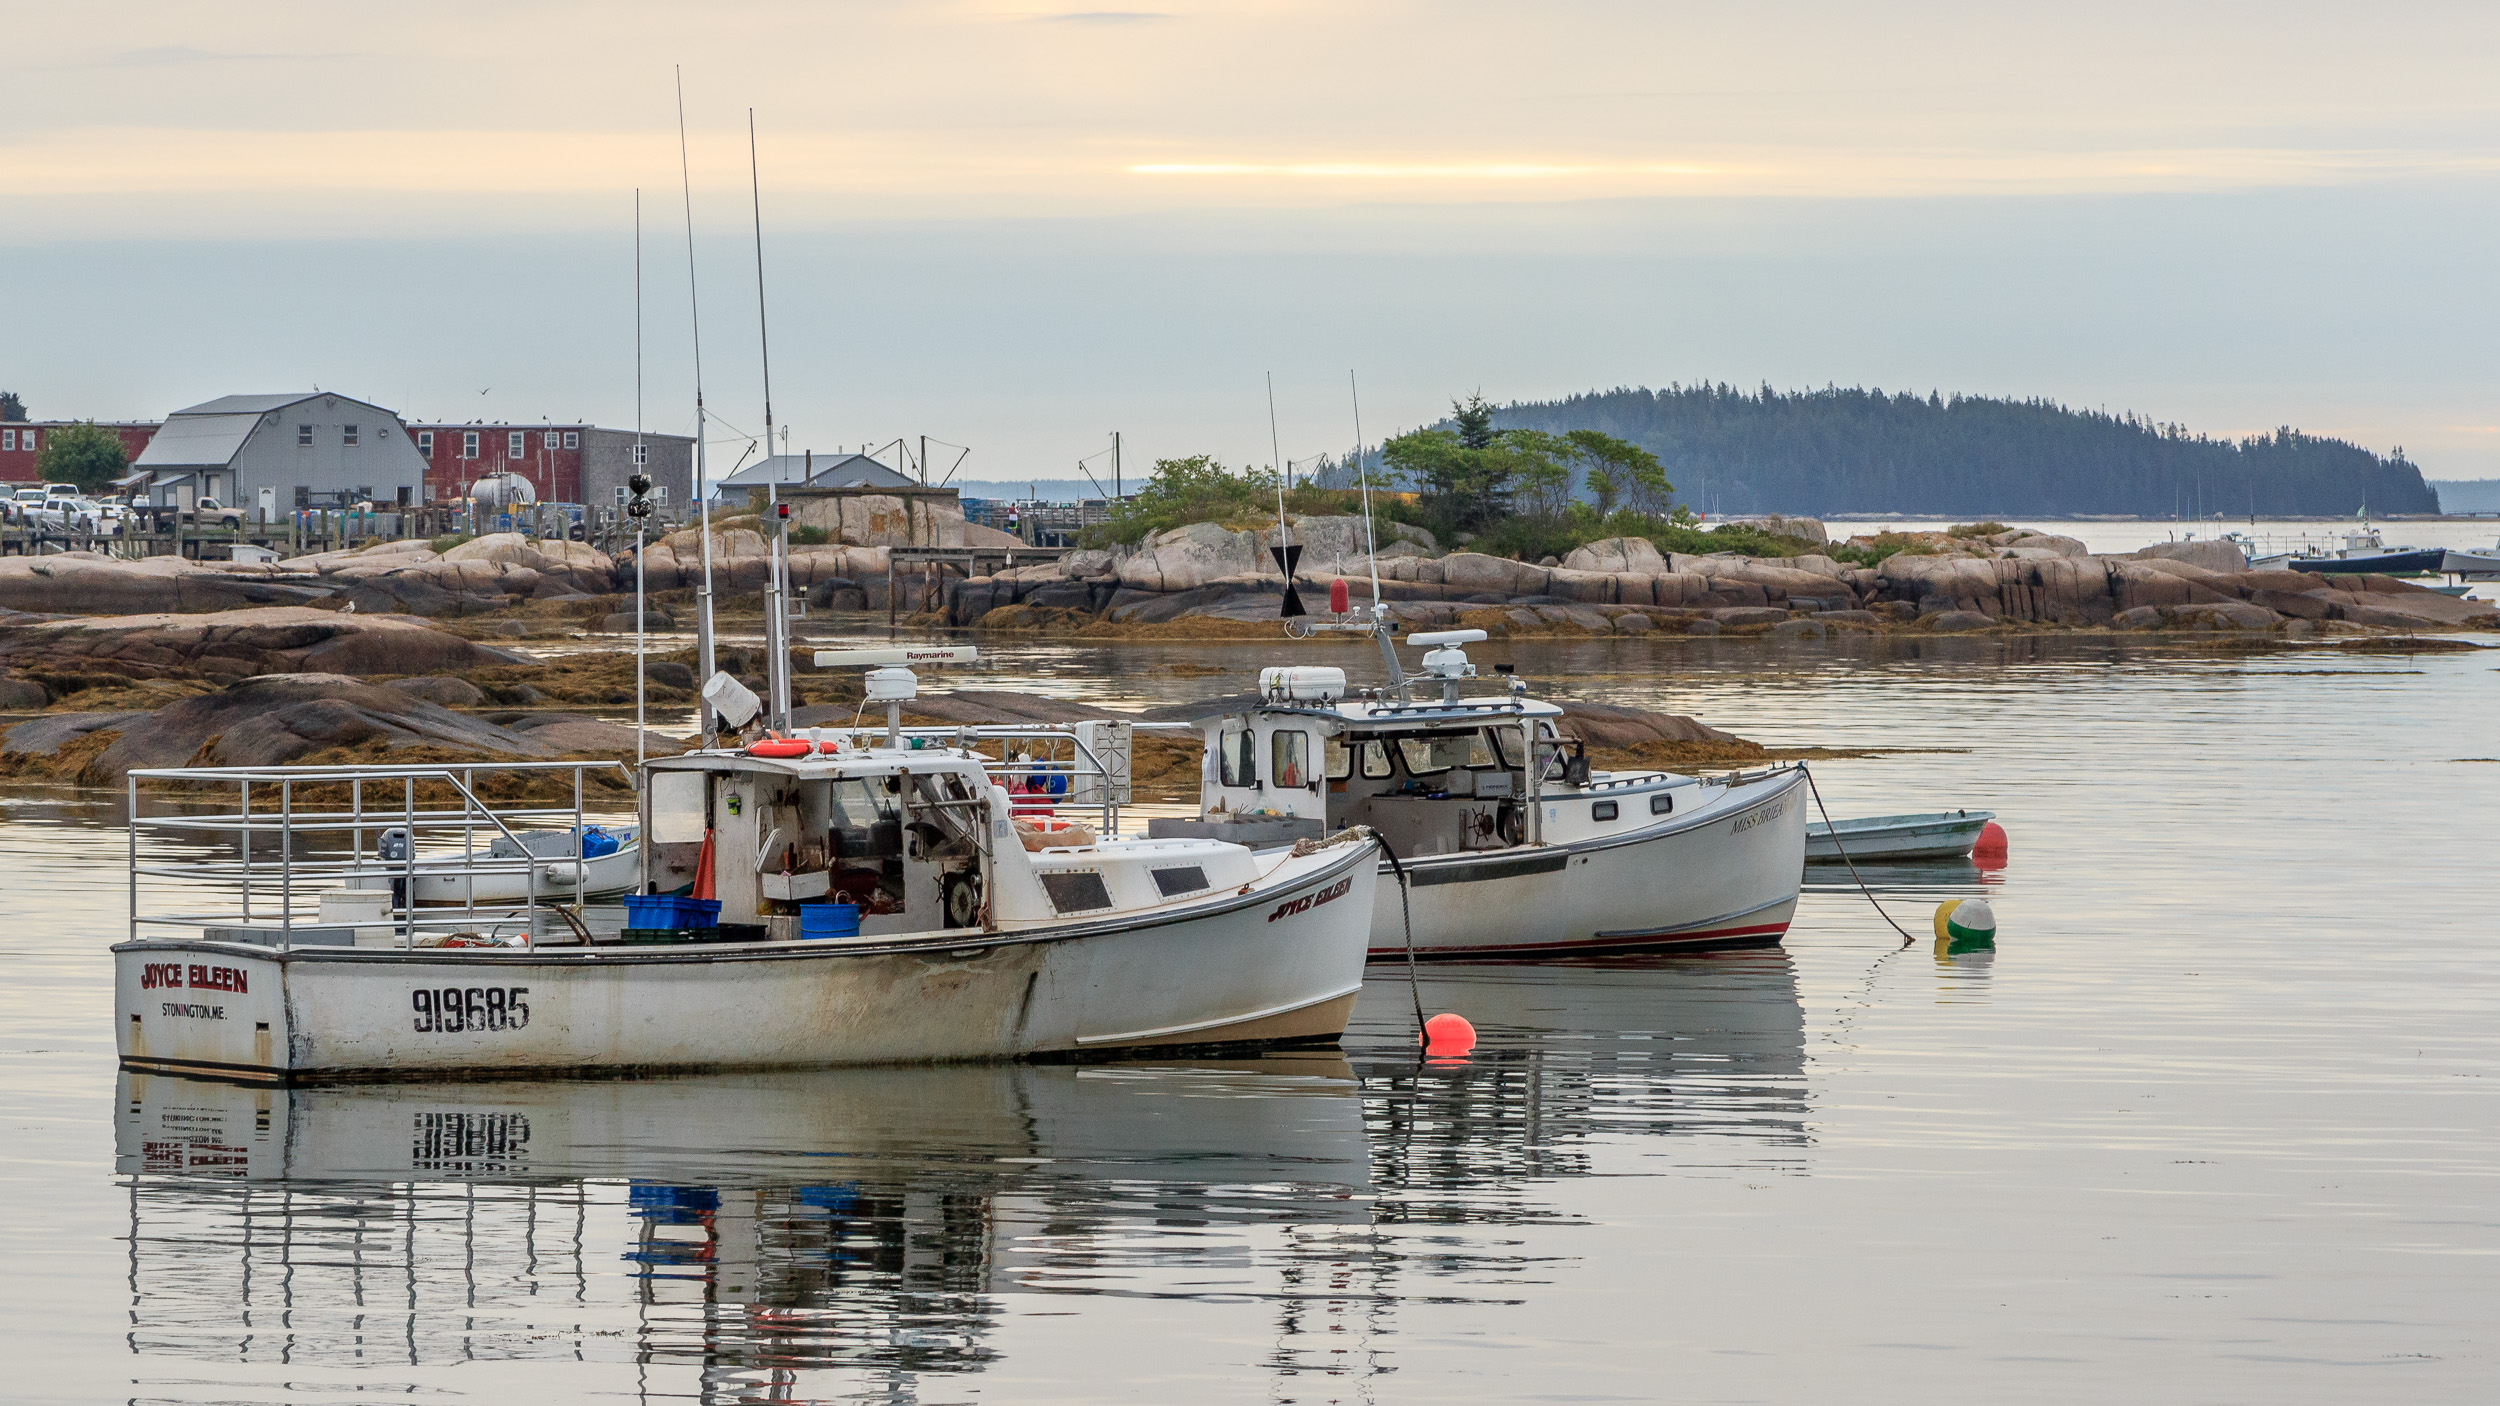 Fishing boats in Stonington, Maine